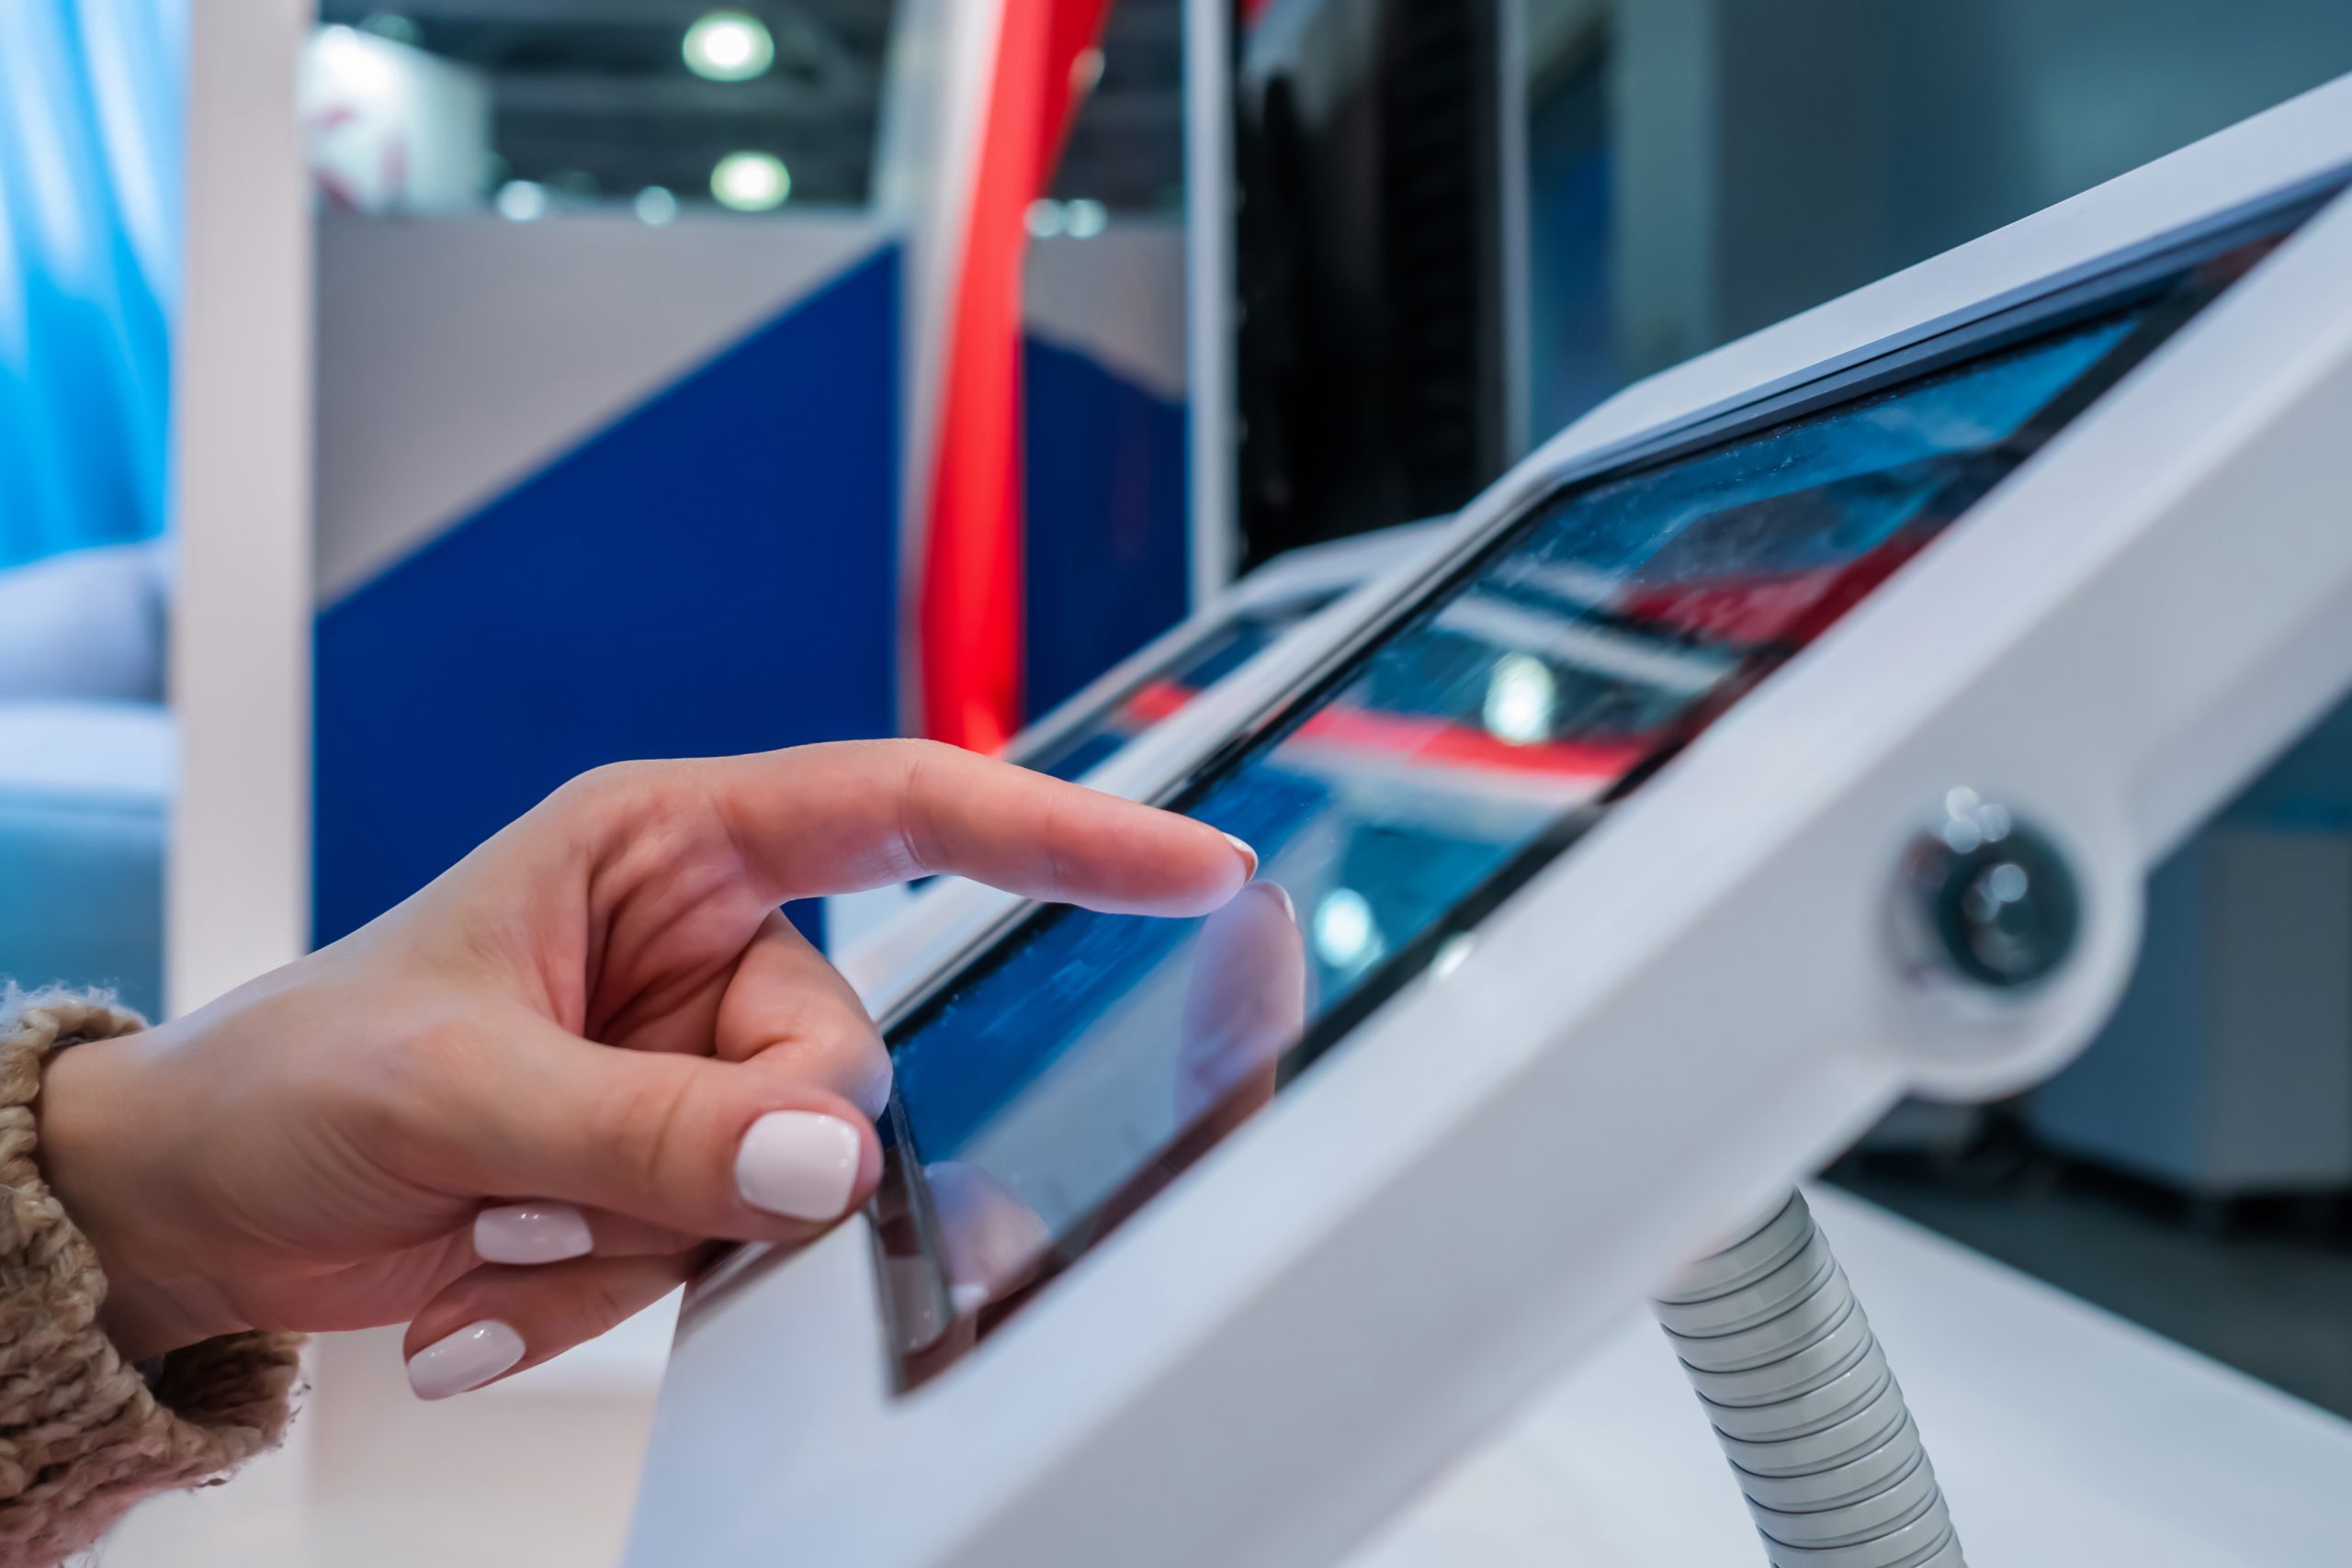 Woman hand using touchscreen display of floor standing white tablet kiosk